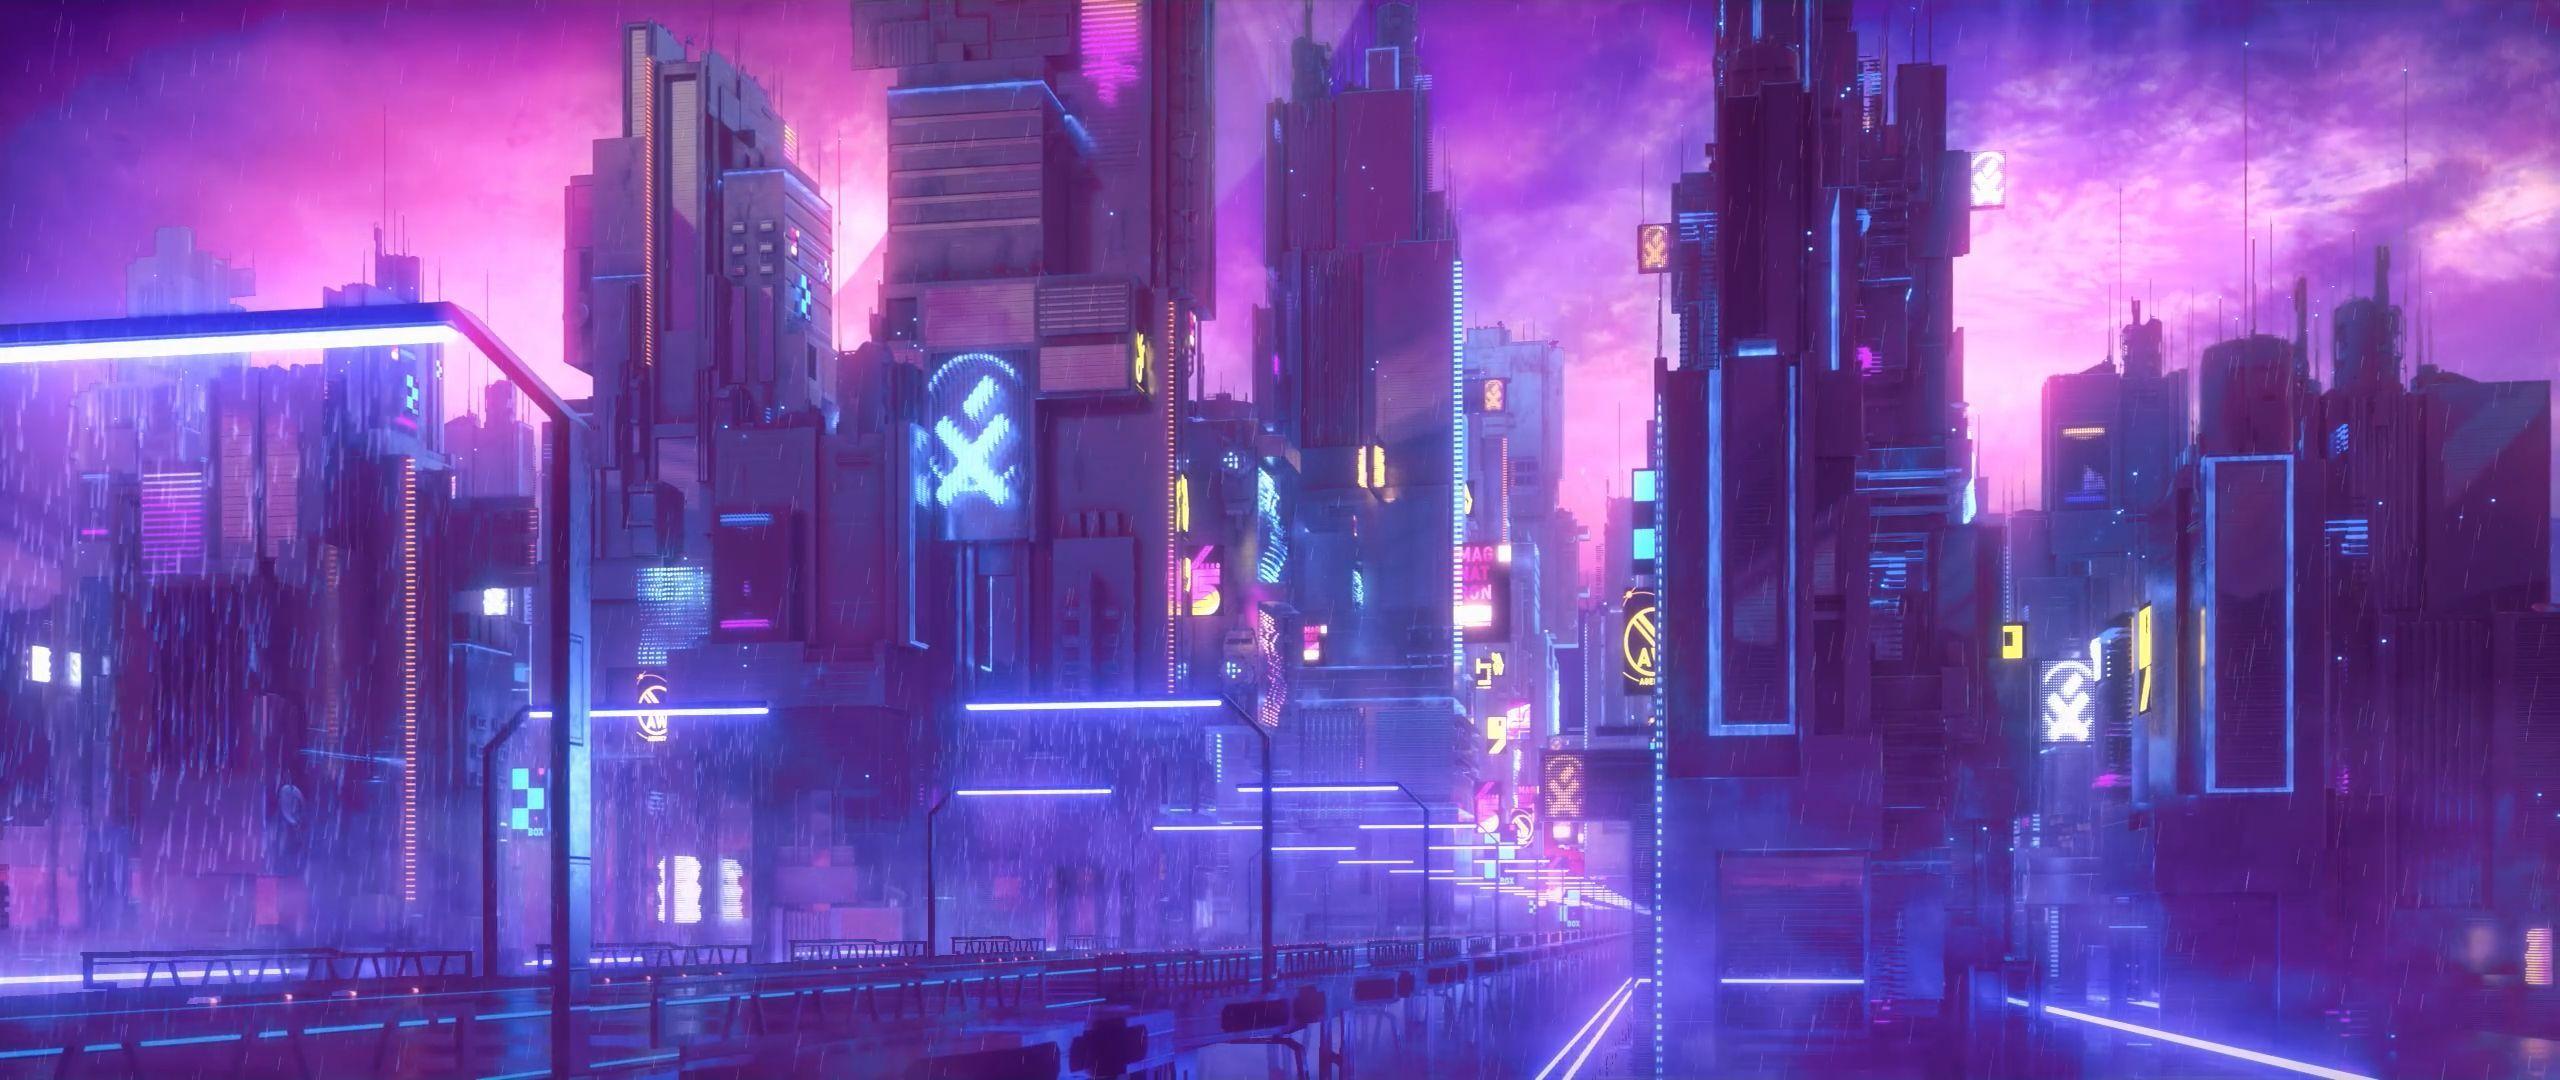 cyberpunk, #neon, #futuristic city, #purple, #neon lights